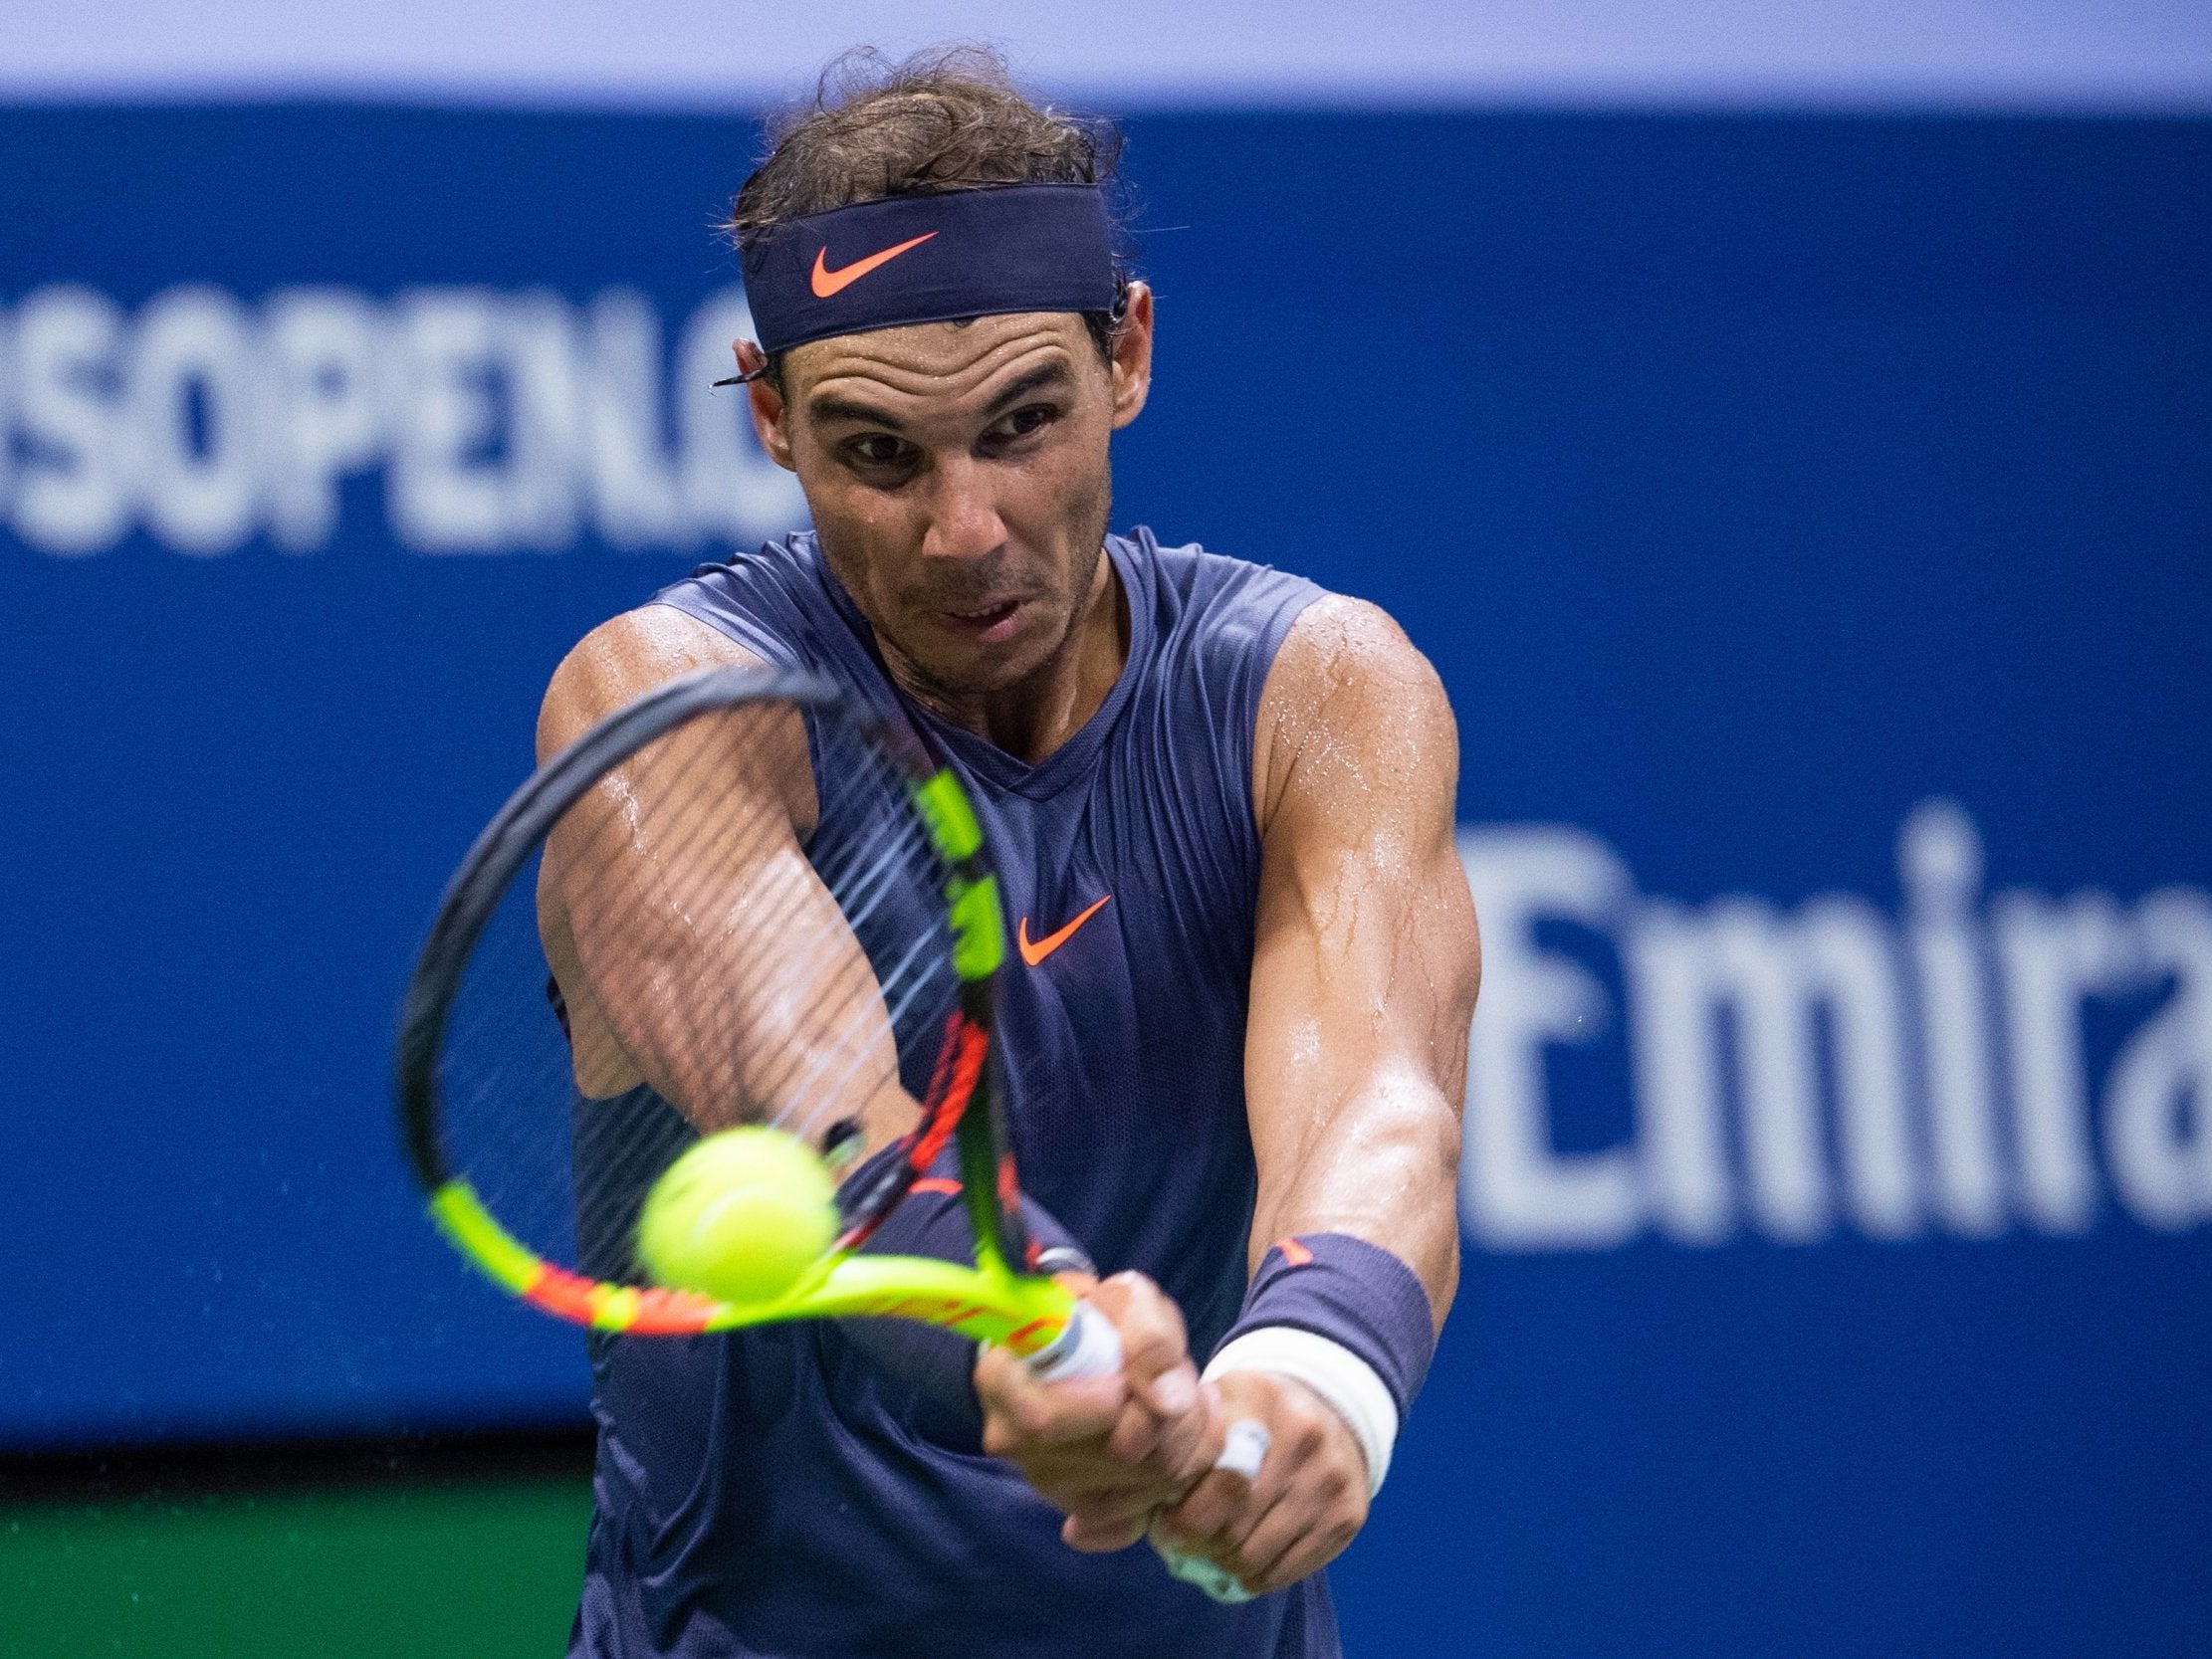 Rafael Nadal cruised through his second-round encounter with Vasek Pospisil